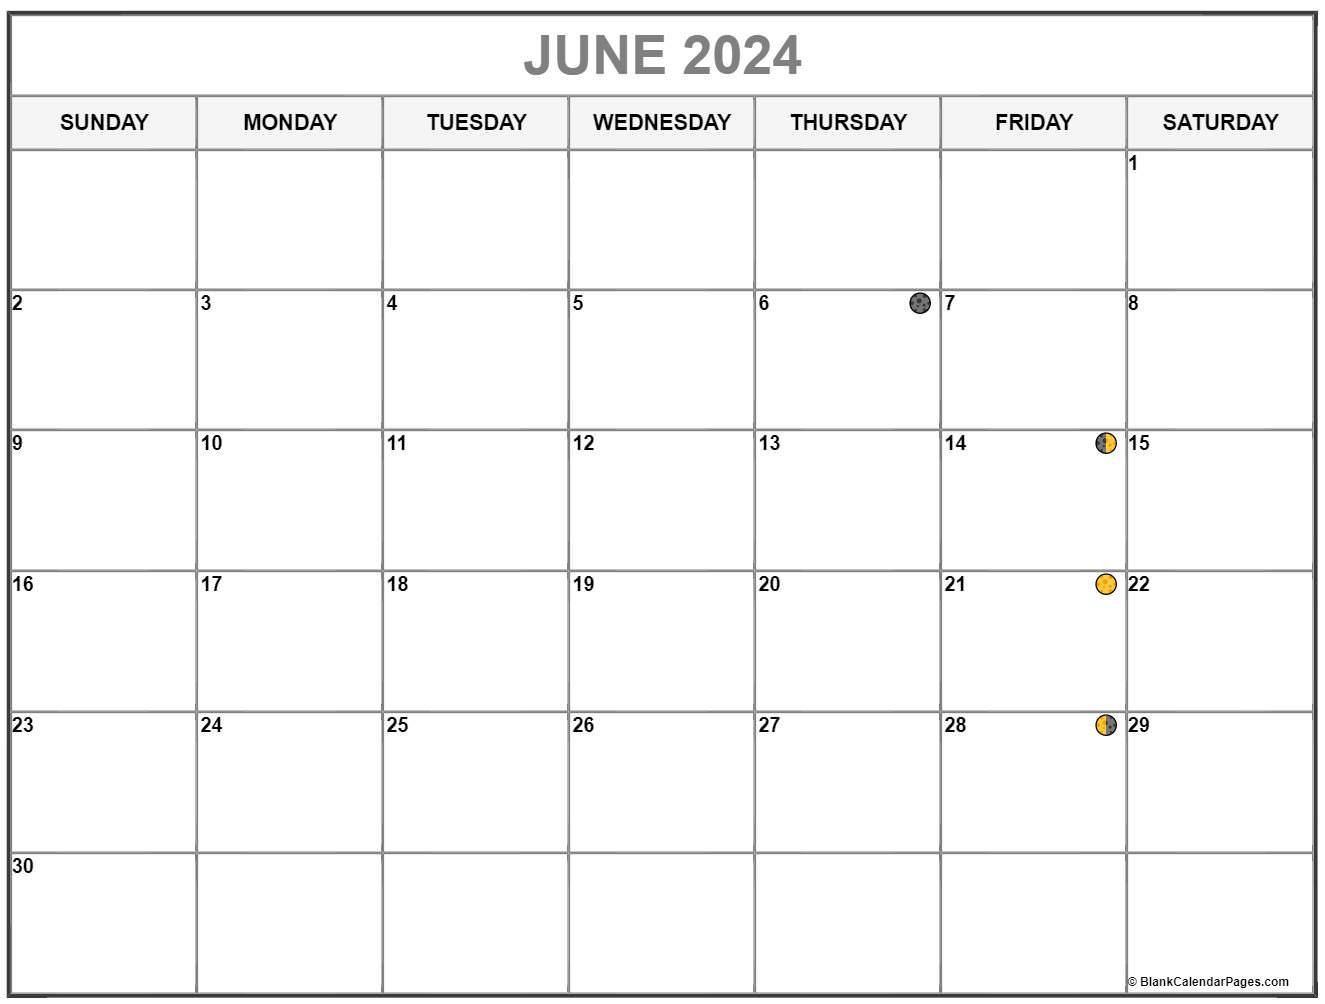 June 2023 Lunar Calendar Moon Phase Calendar